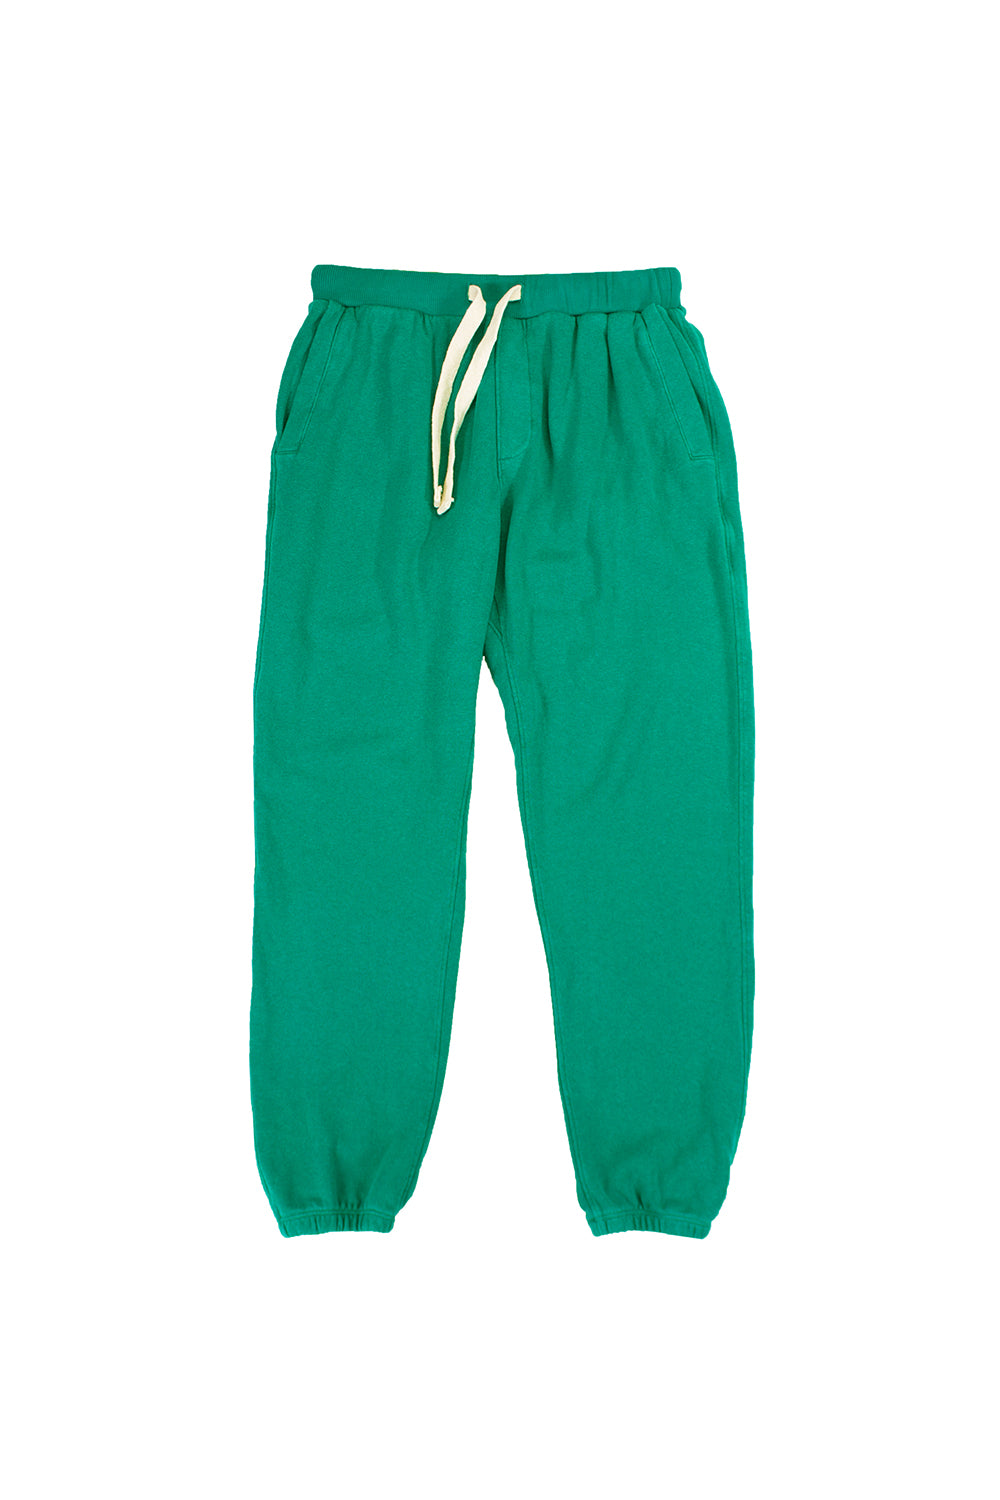 Yelapa Sweatpant | Jungmaven Hemp Clothing & Accessories / Color: Jade Green